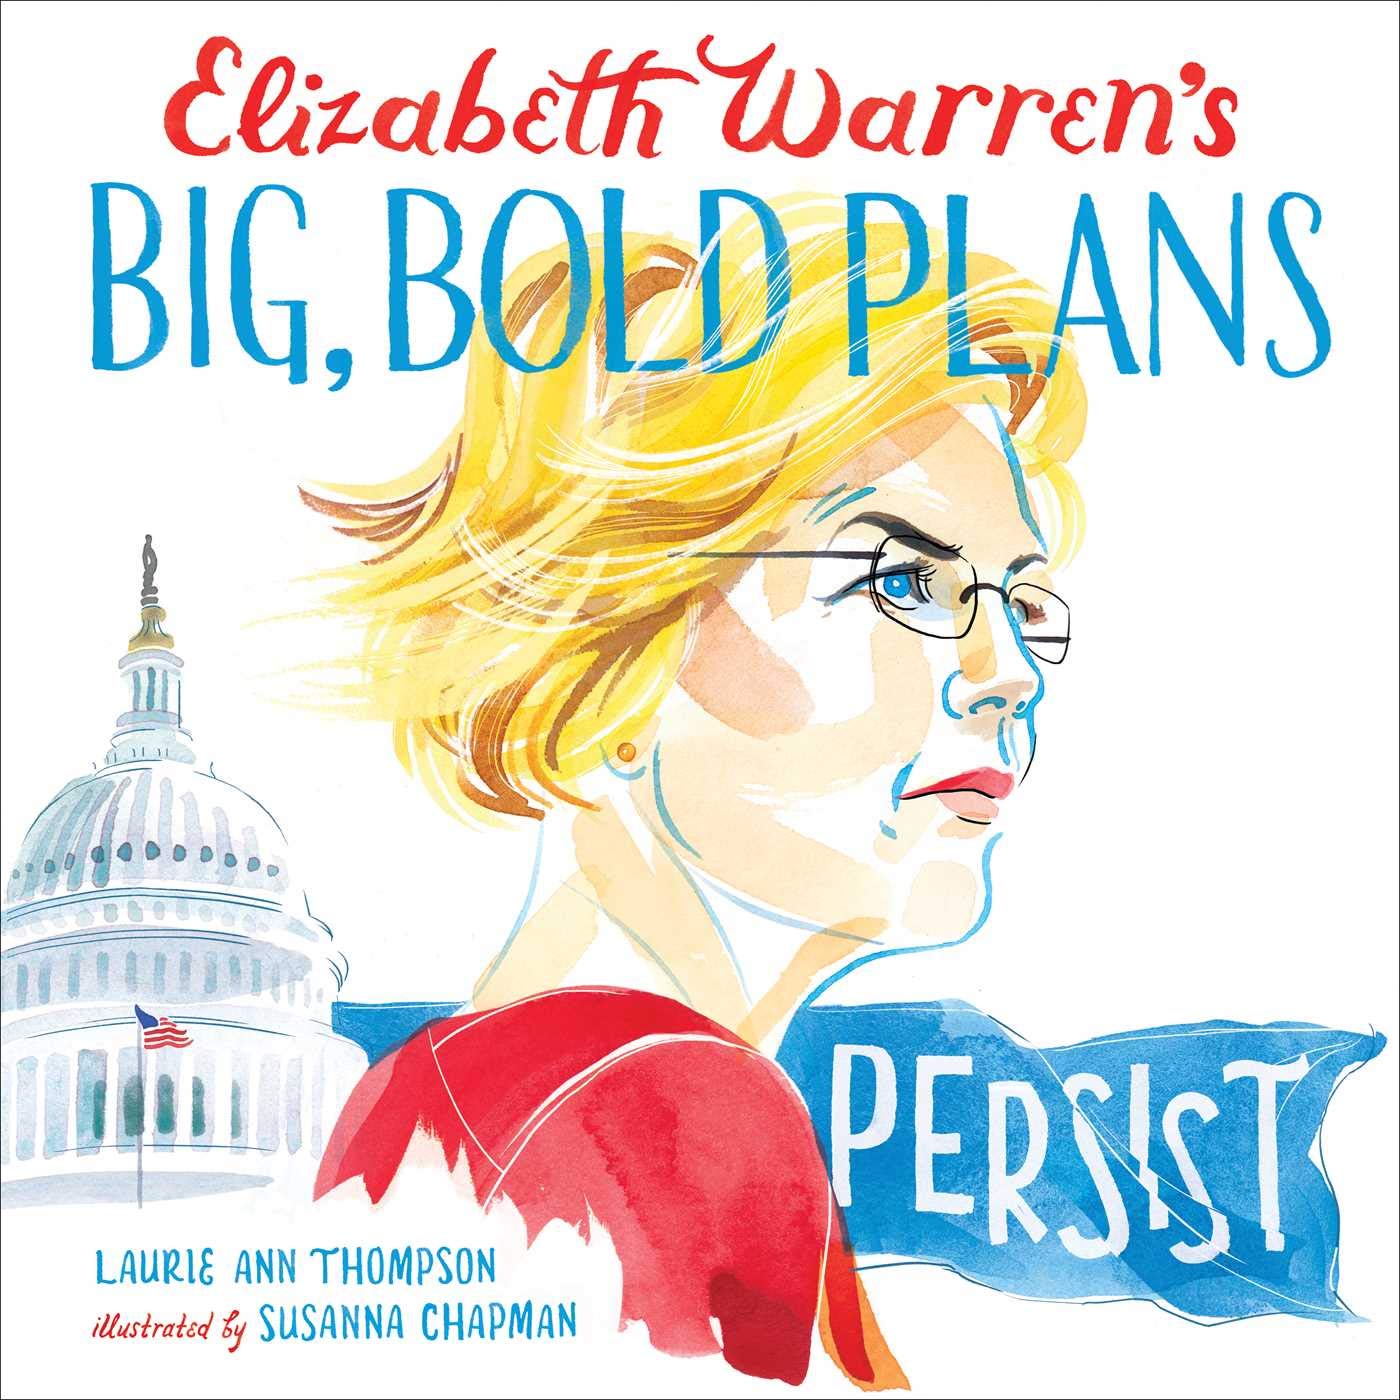 Elizabeth Warren’s Big, Bold Plans